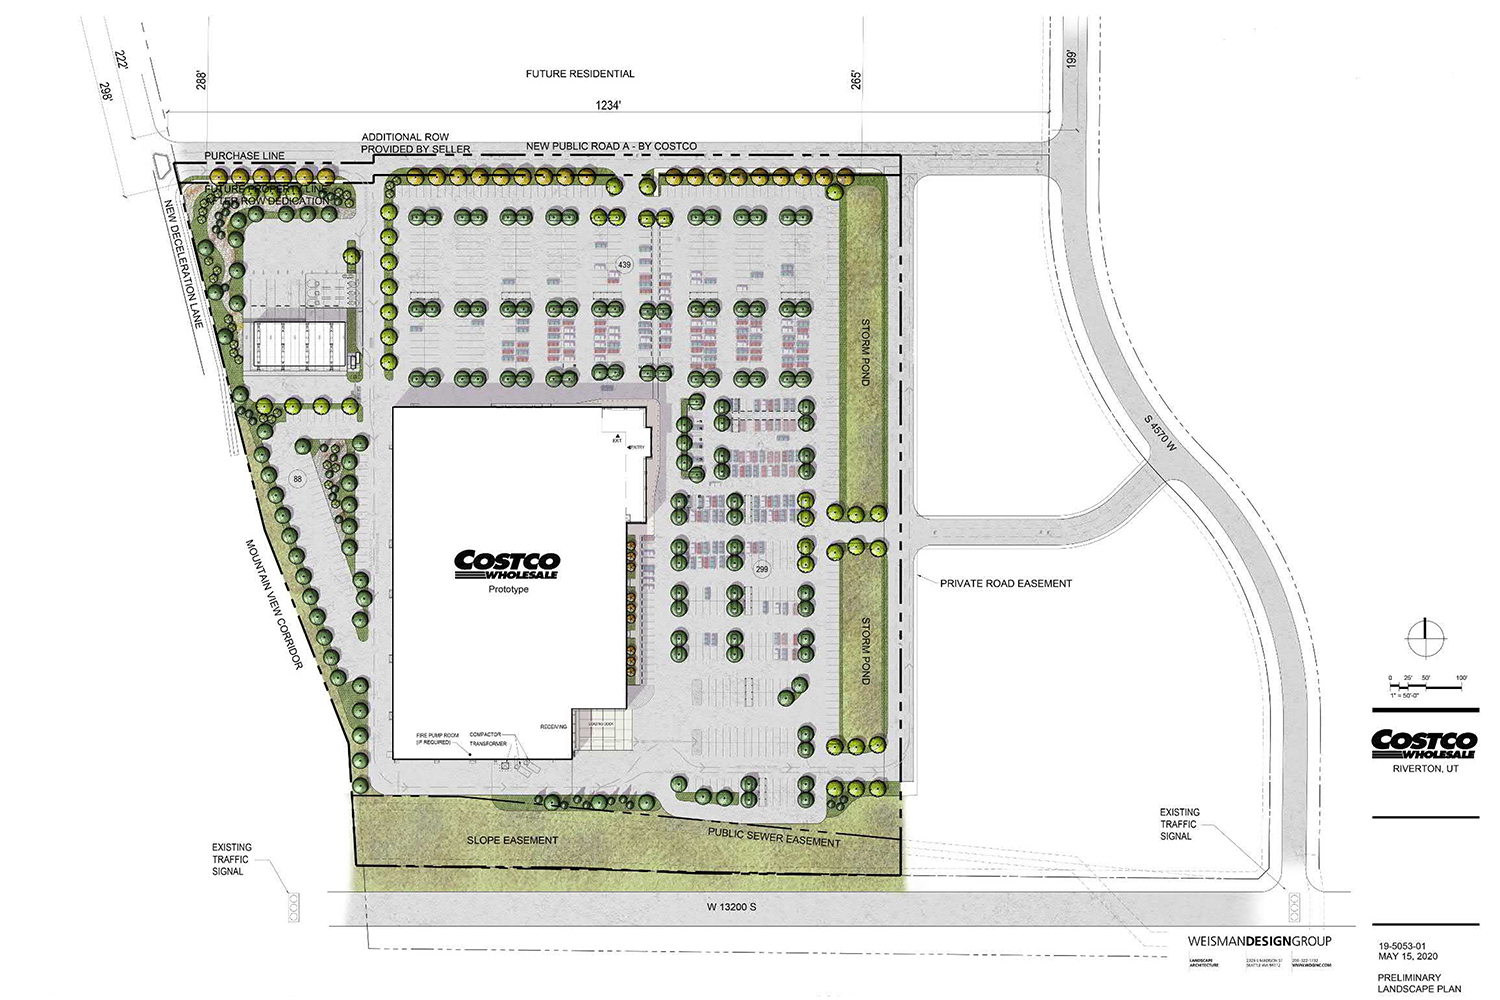 Riverton Costco - Conceptual Landscaping Site Plan